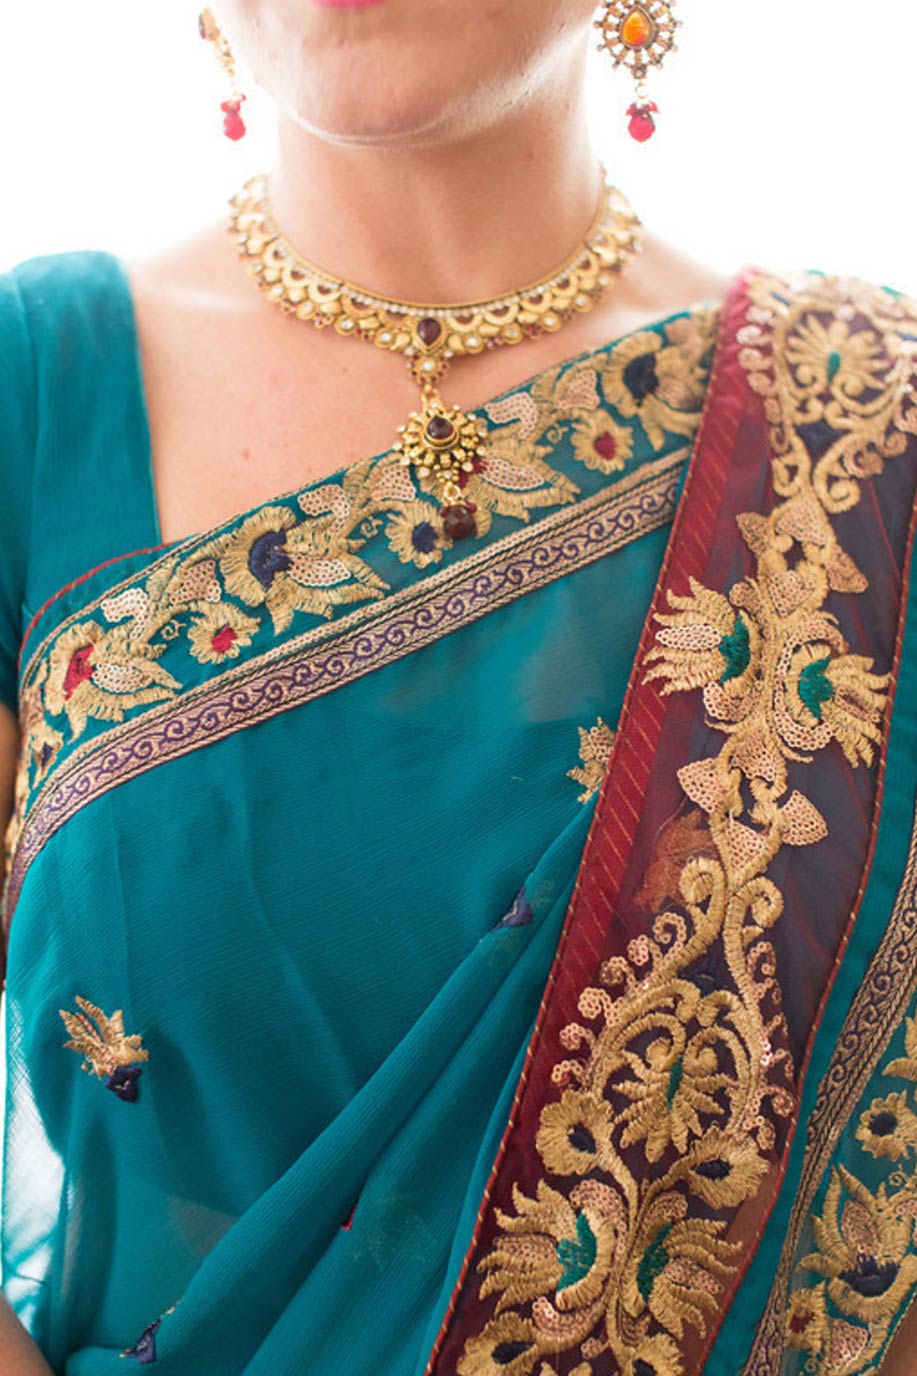 Blue wedding sari